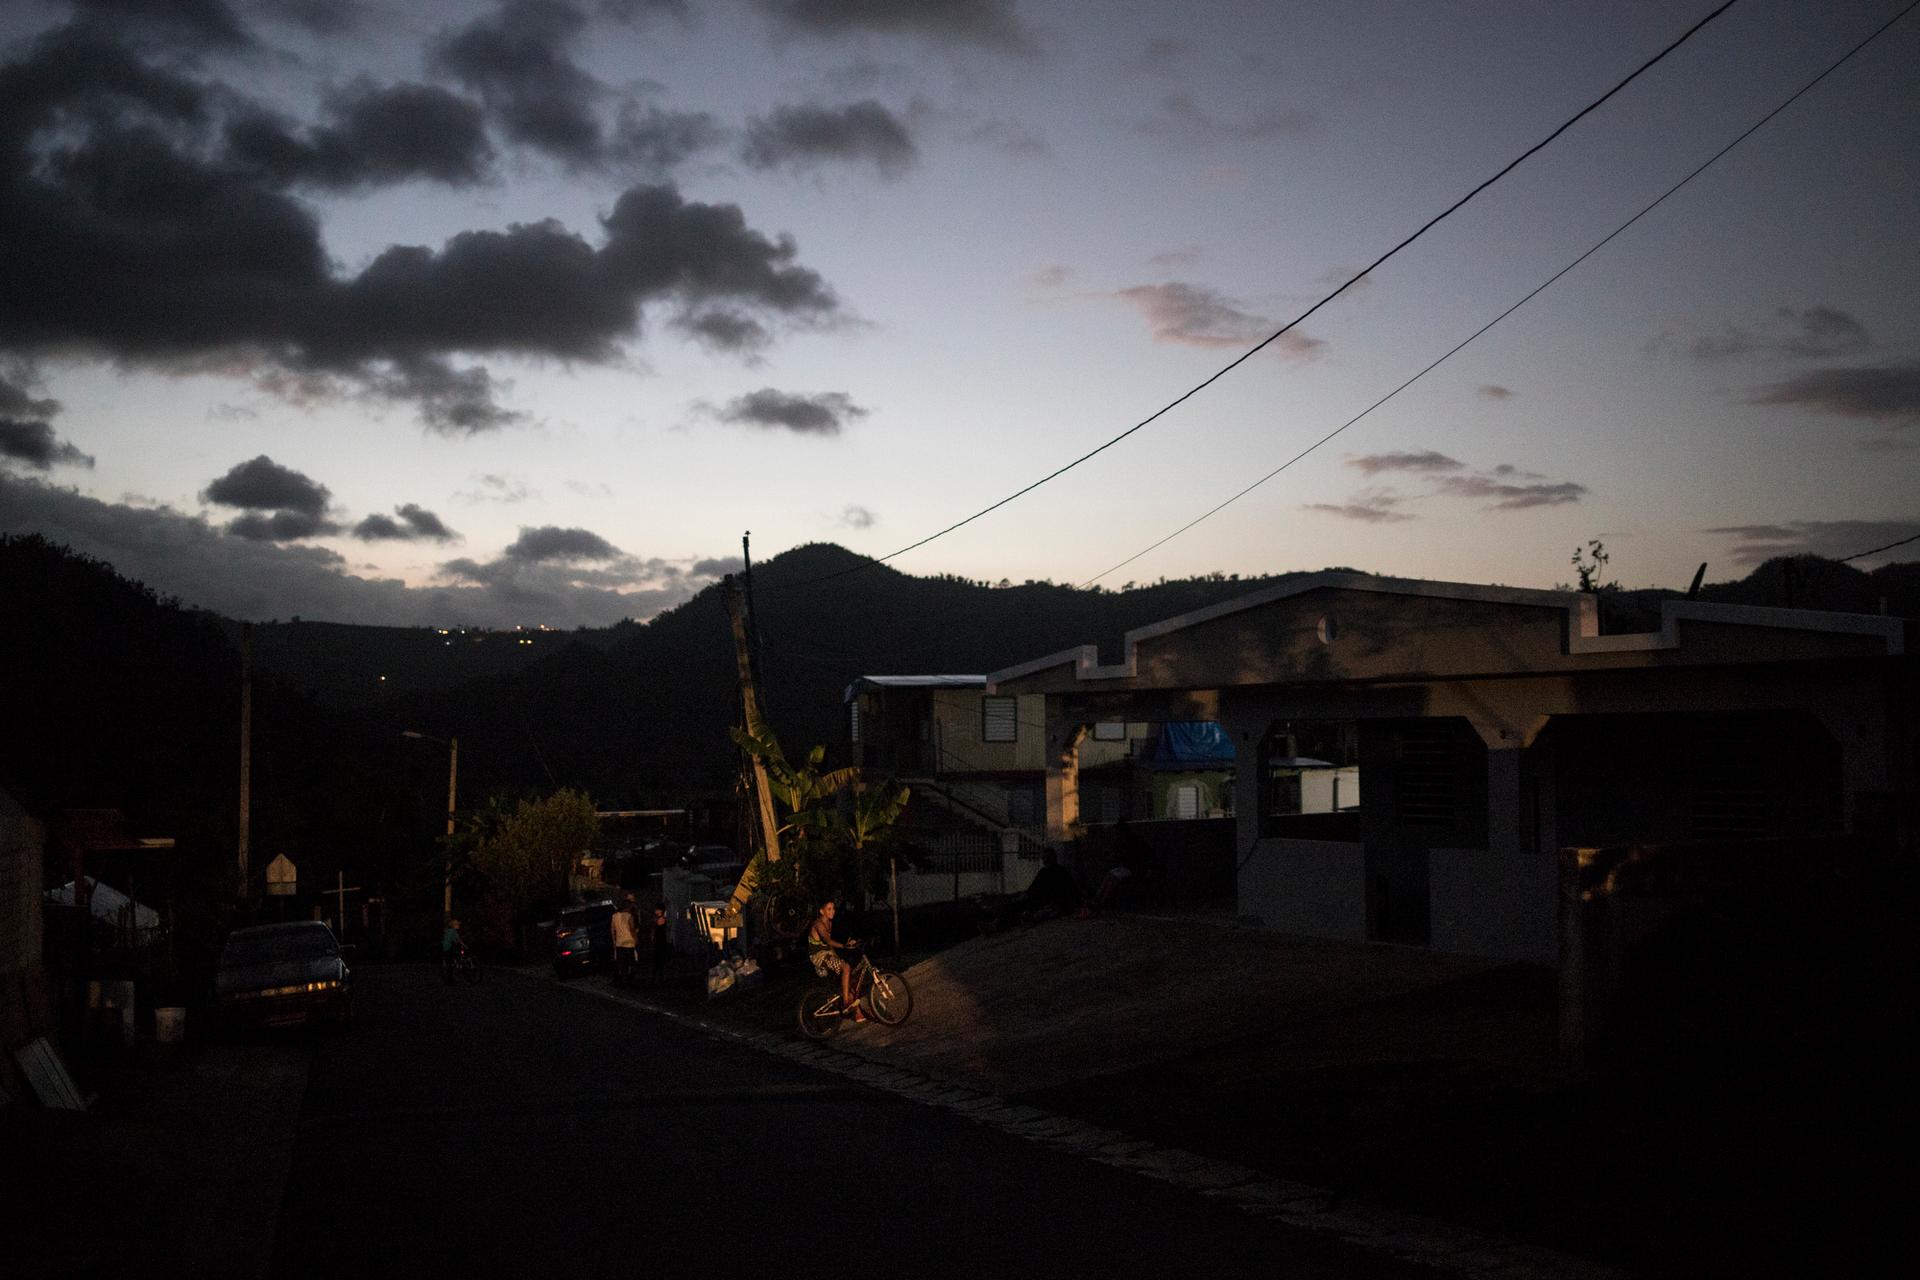 Car headlights illuminate a boy on his bike in the town of Utuado